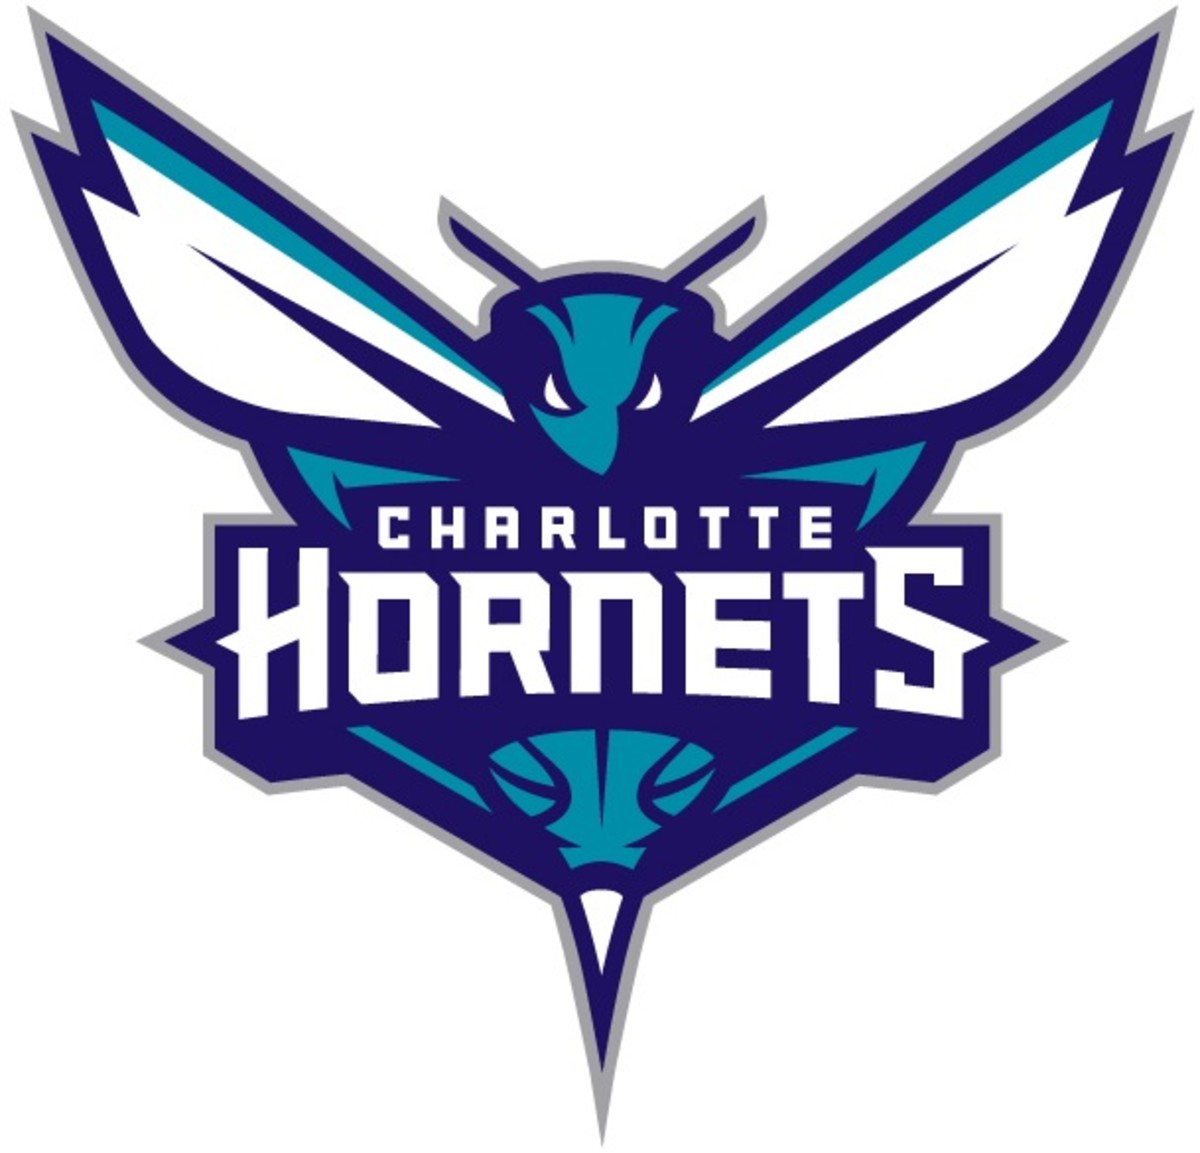 The new "Charlotte Hornets" logo. (Bobcats)